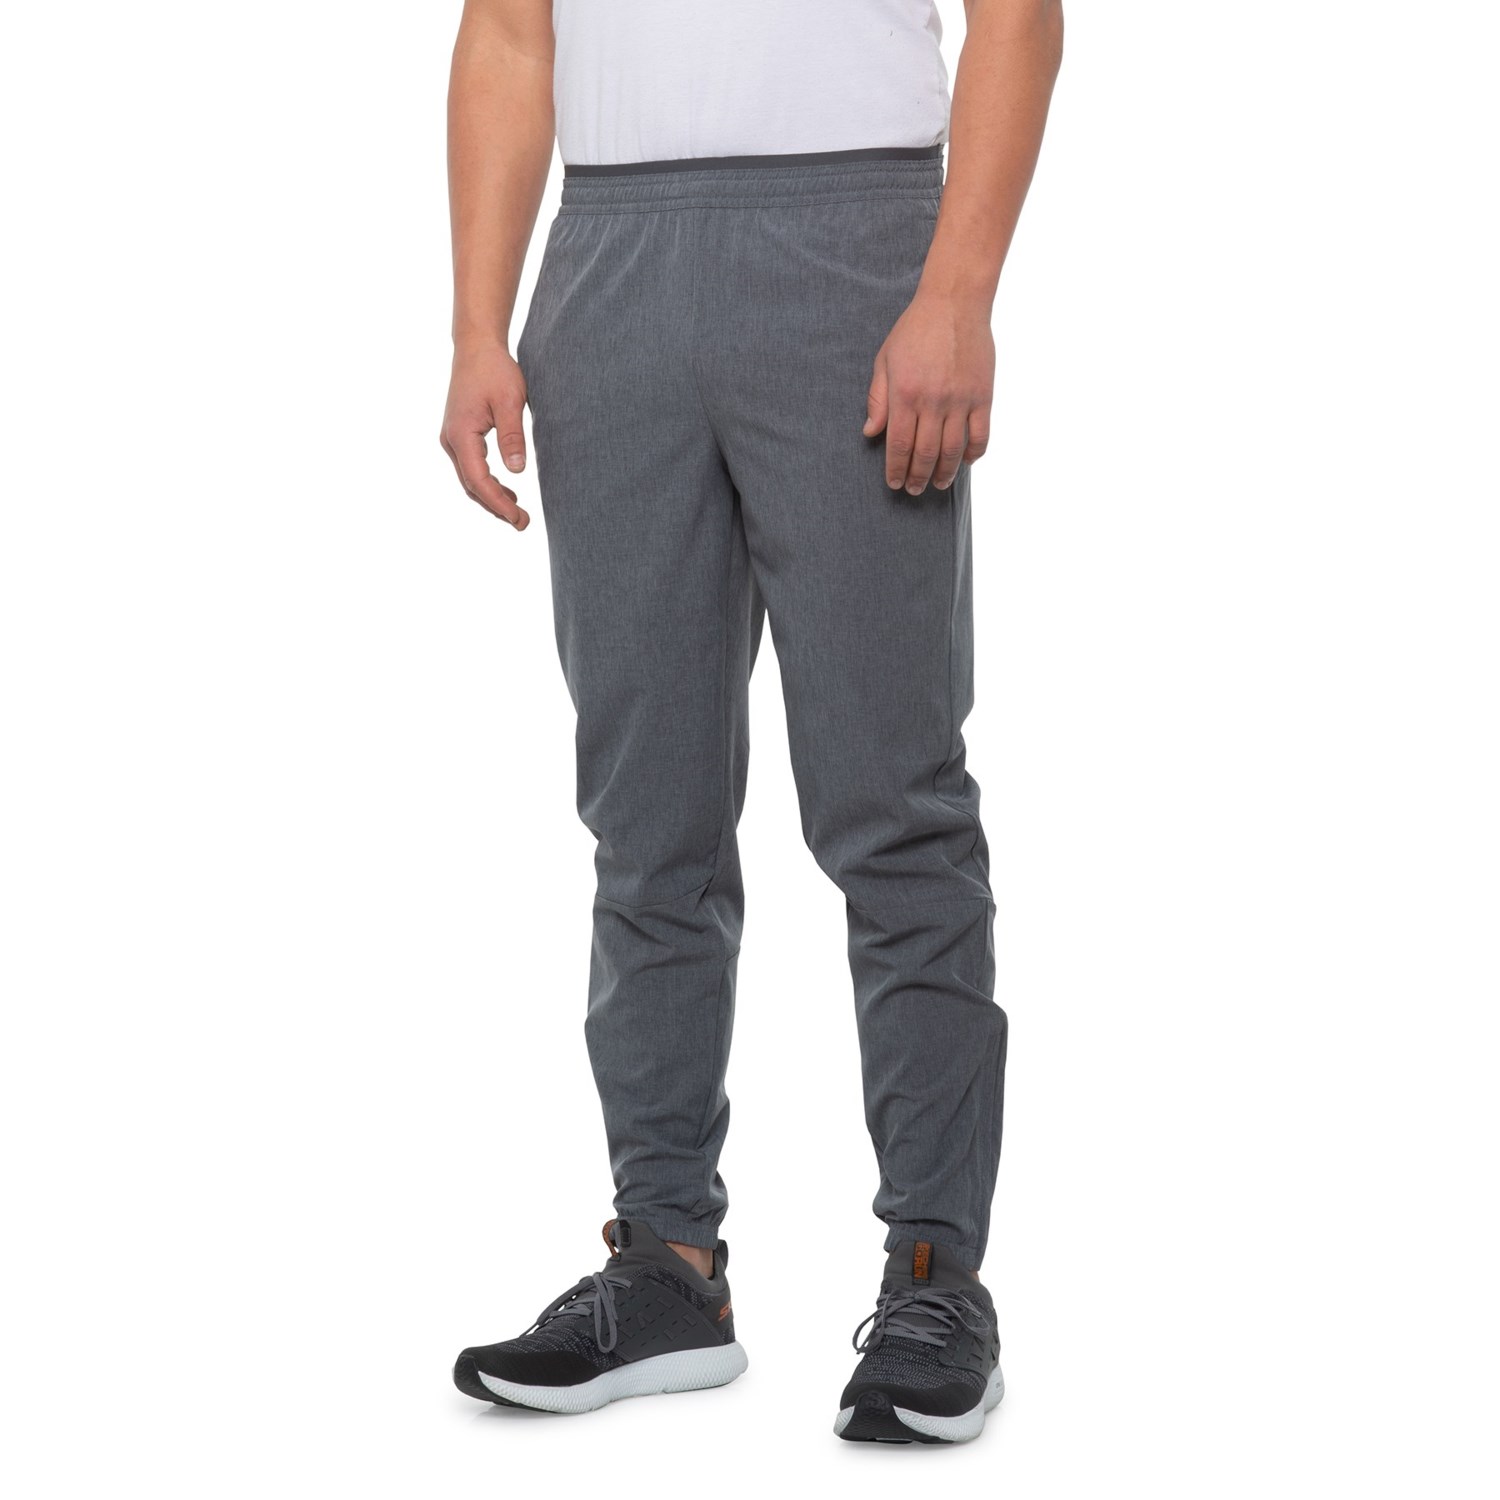 Skora Flex Woven Pants (For Men) - Save 54%